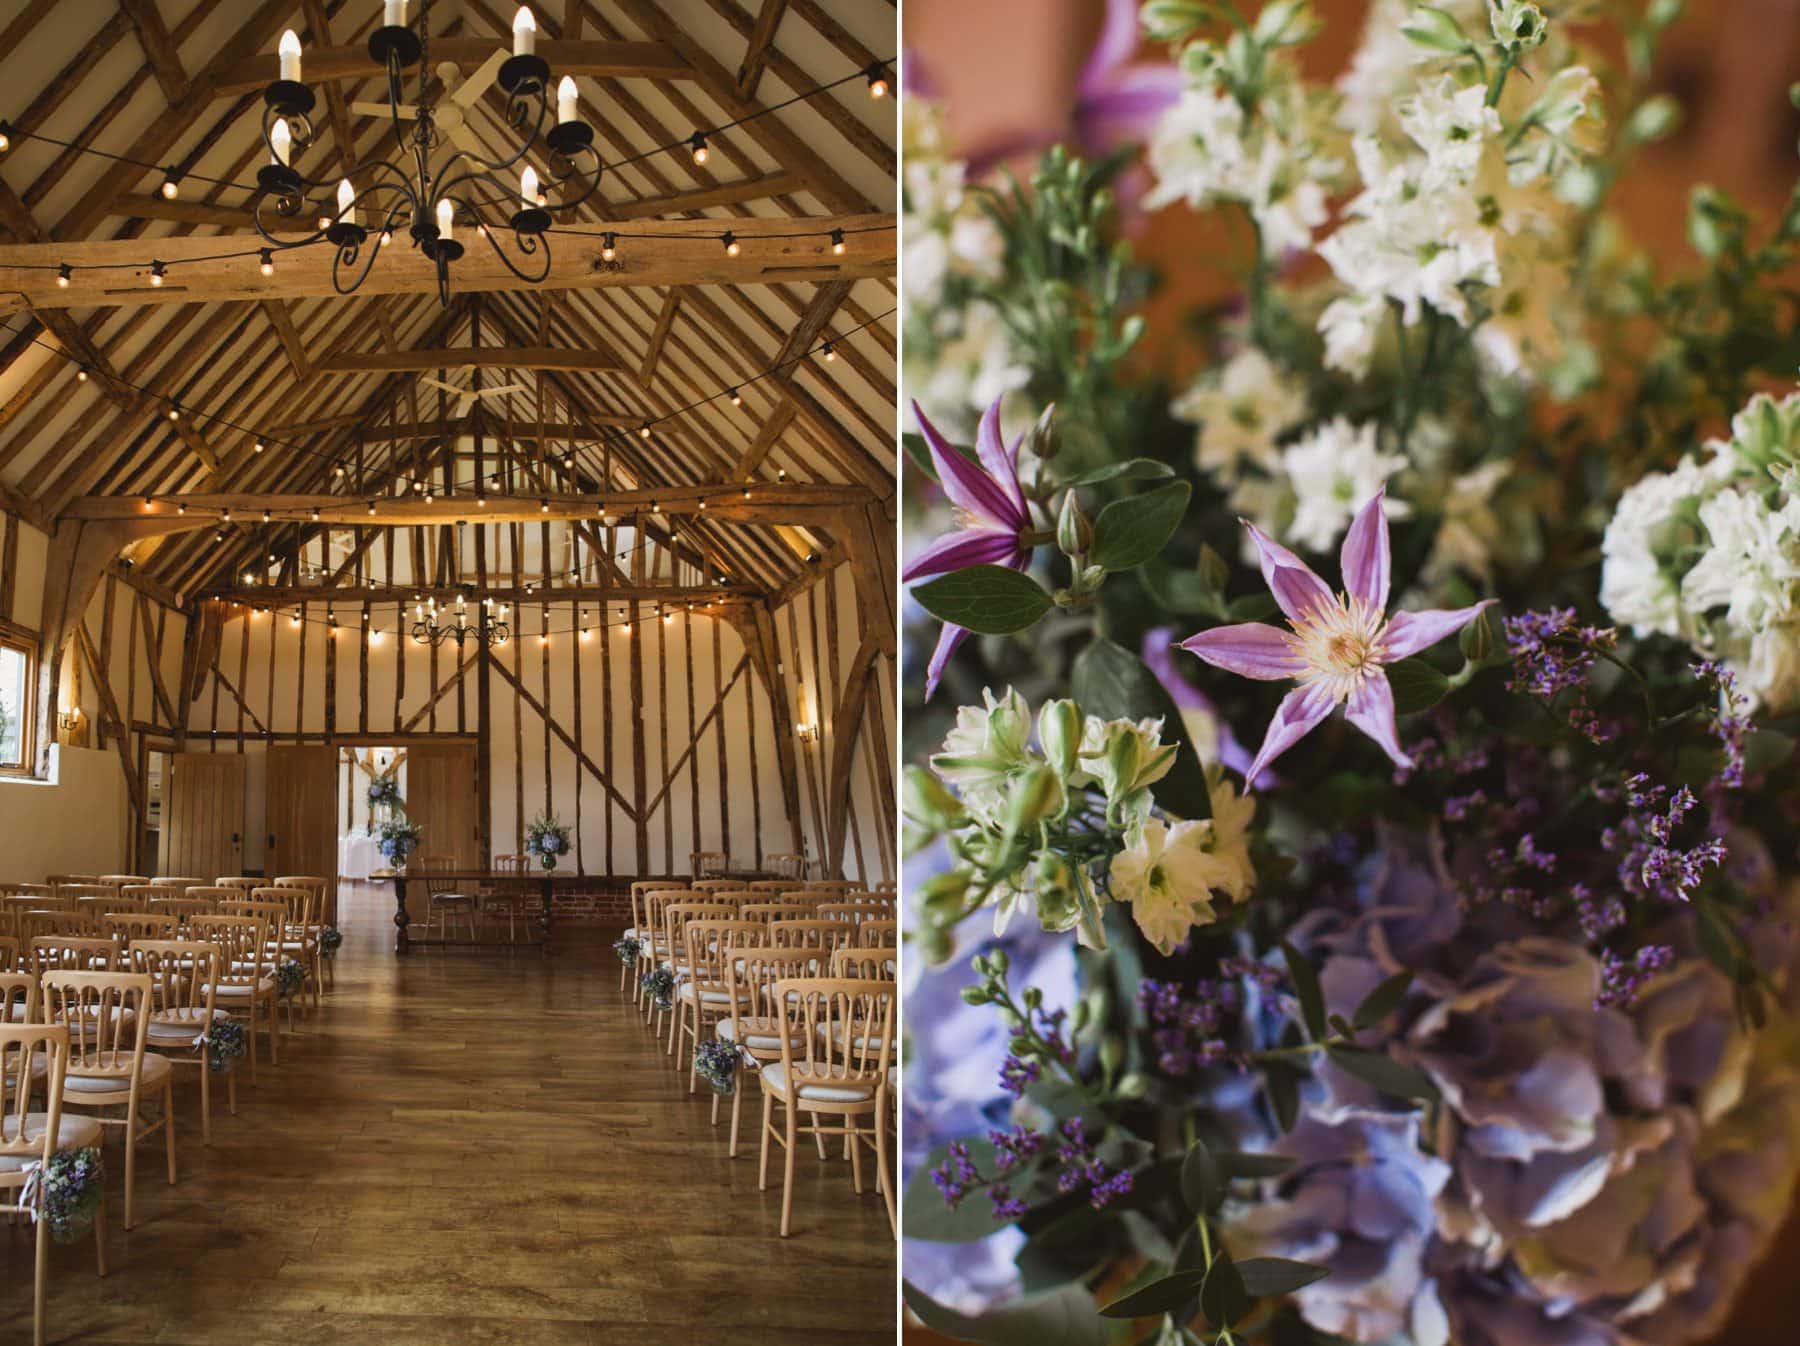 bruisyard hall and barn wedding and flowers